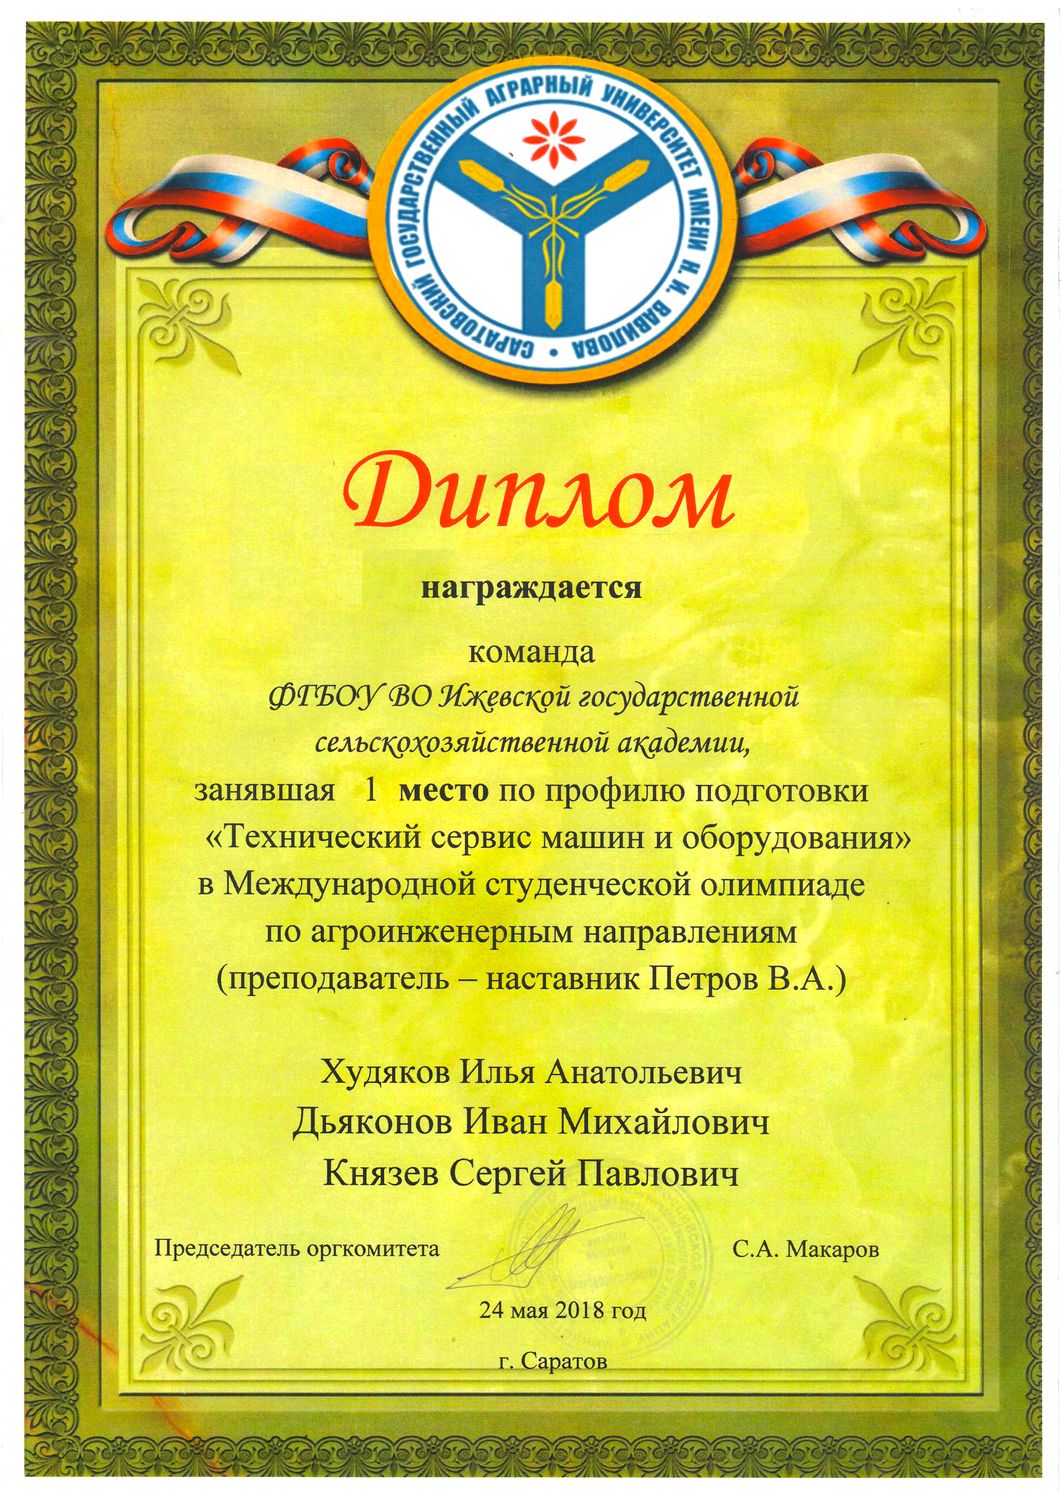 Diplom Saratov